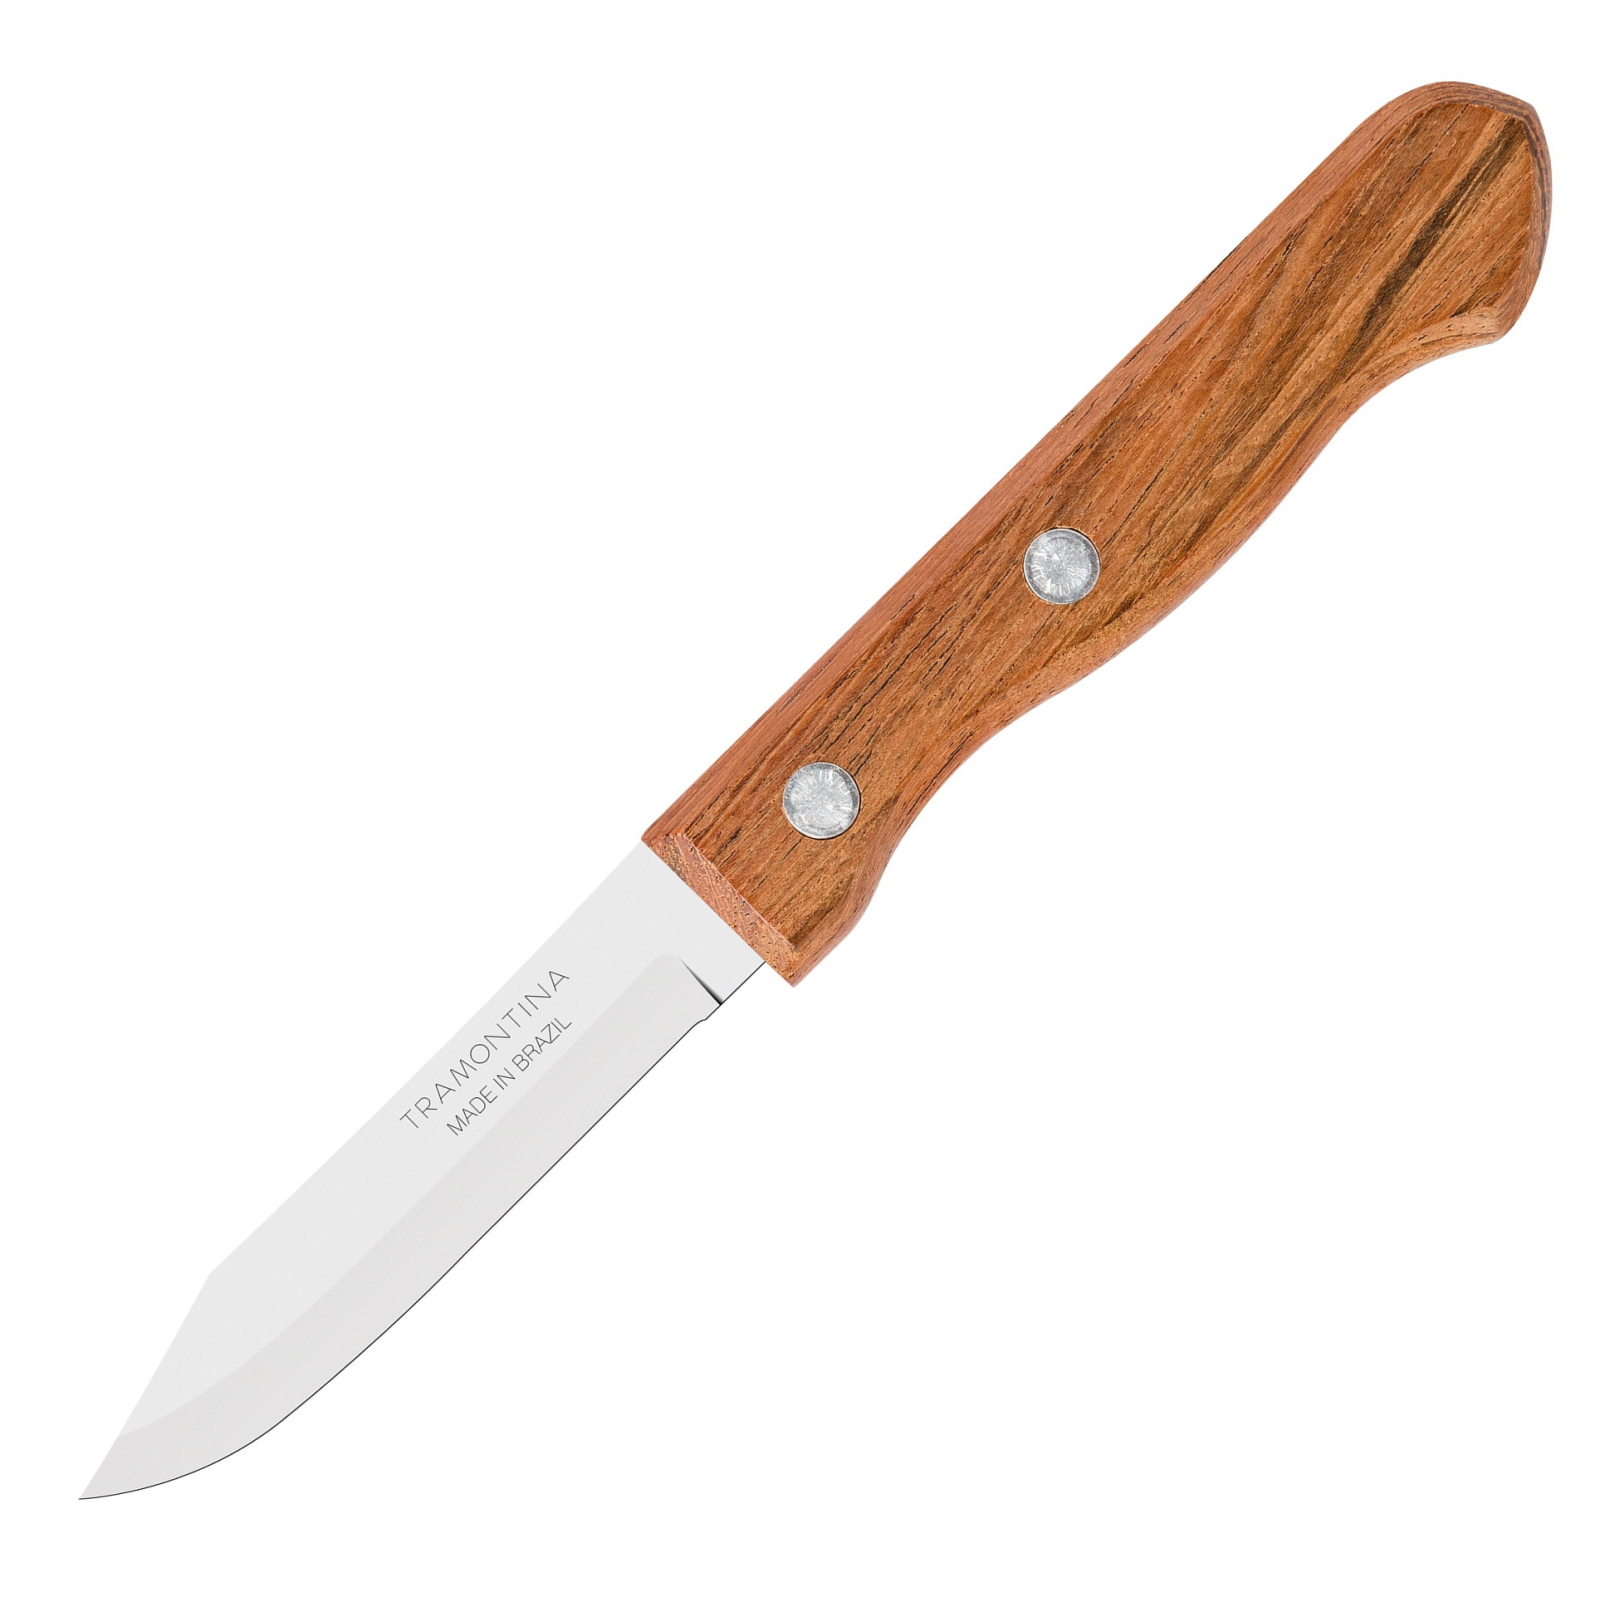 Кухонный нож Tramontina Dynamic Vegetable 8 cм (22310/103)